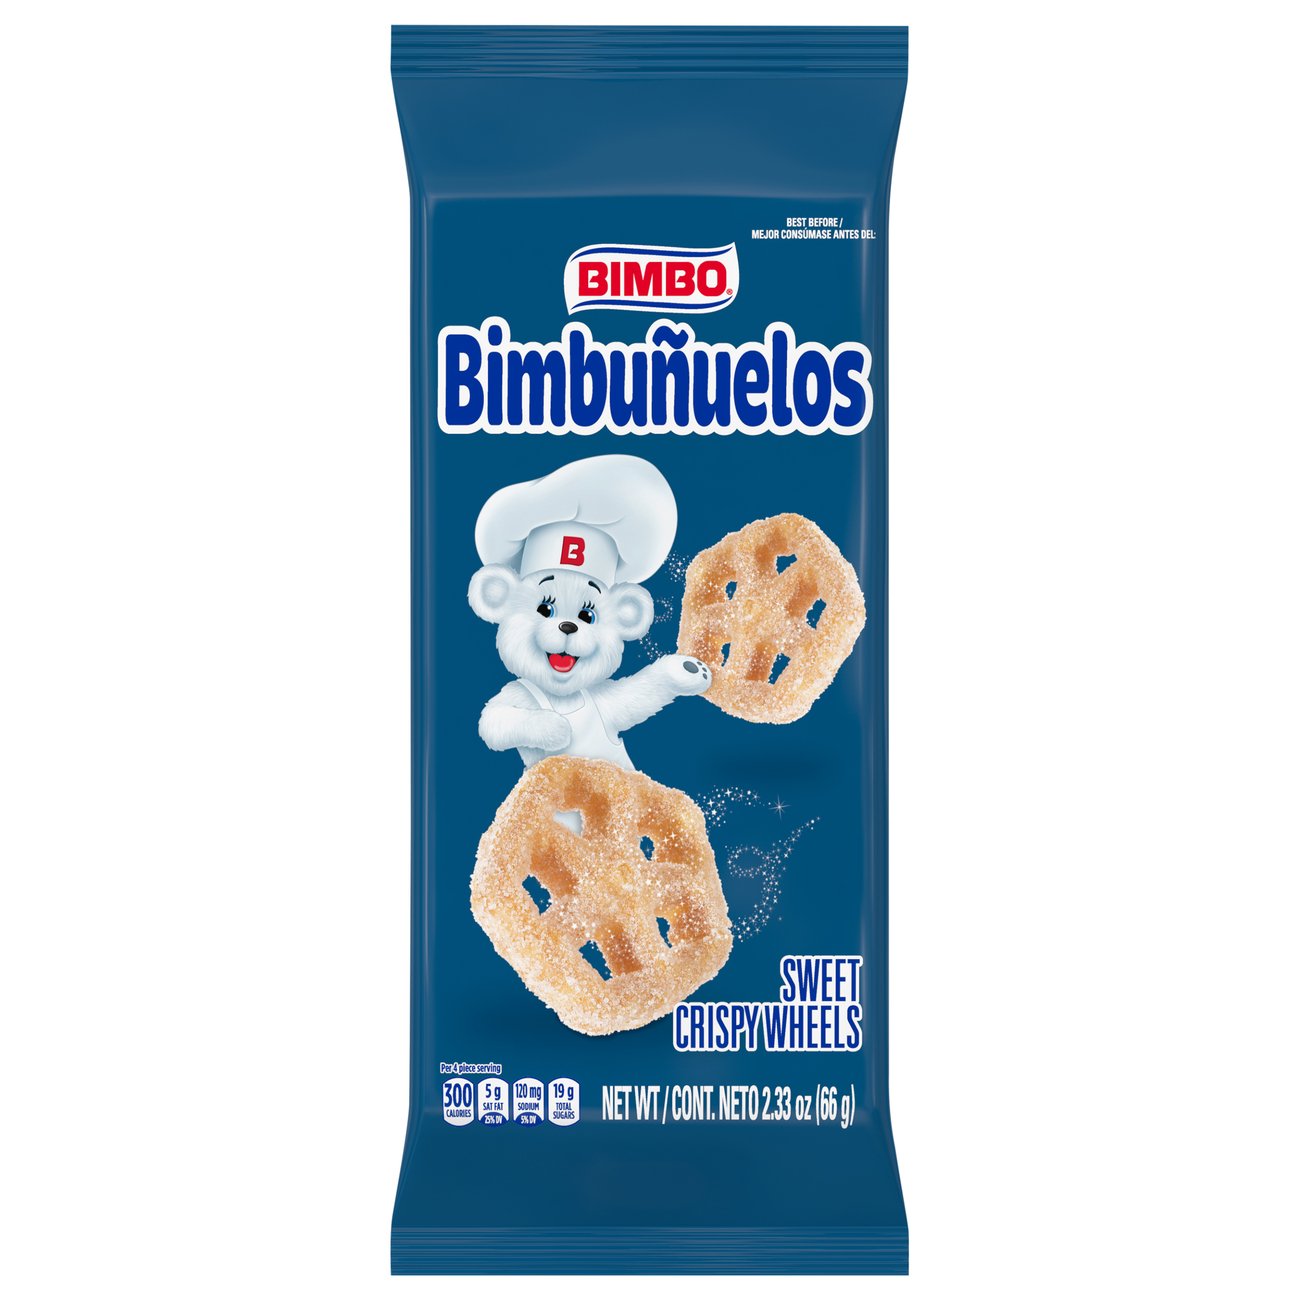 Bimbo Bimbunuelos Crispy Wheels Pastry Shop Snack Cakes At H E B 